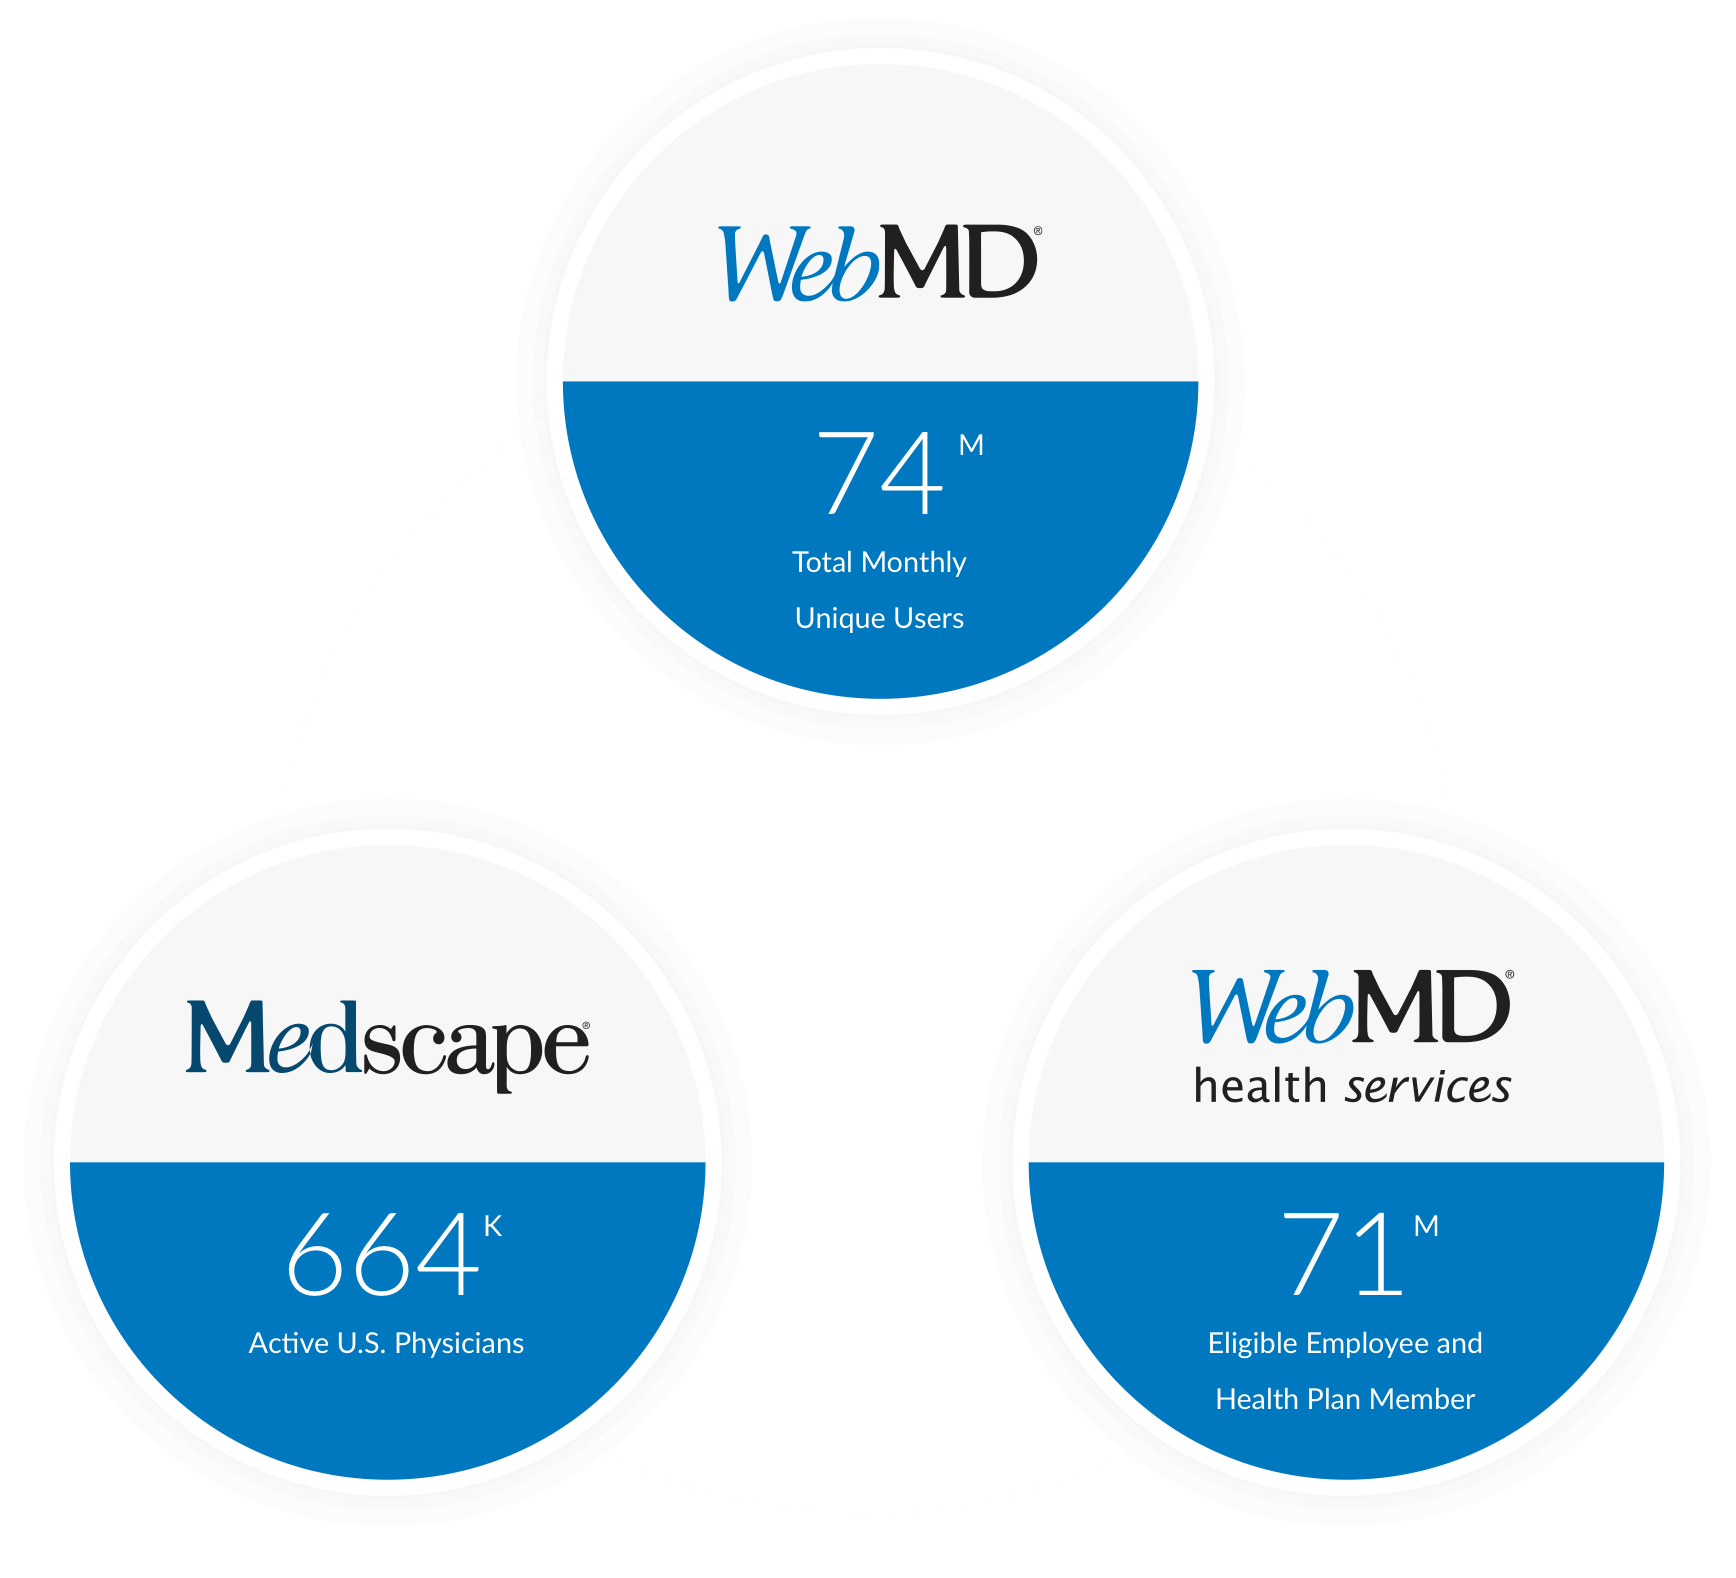 Webmd.com Logo - About Us - WebMD Health Services